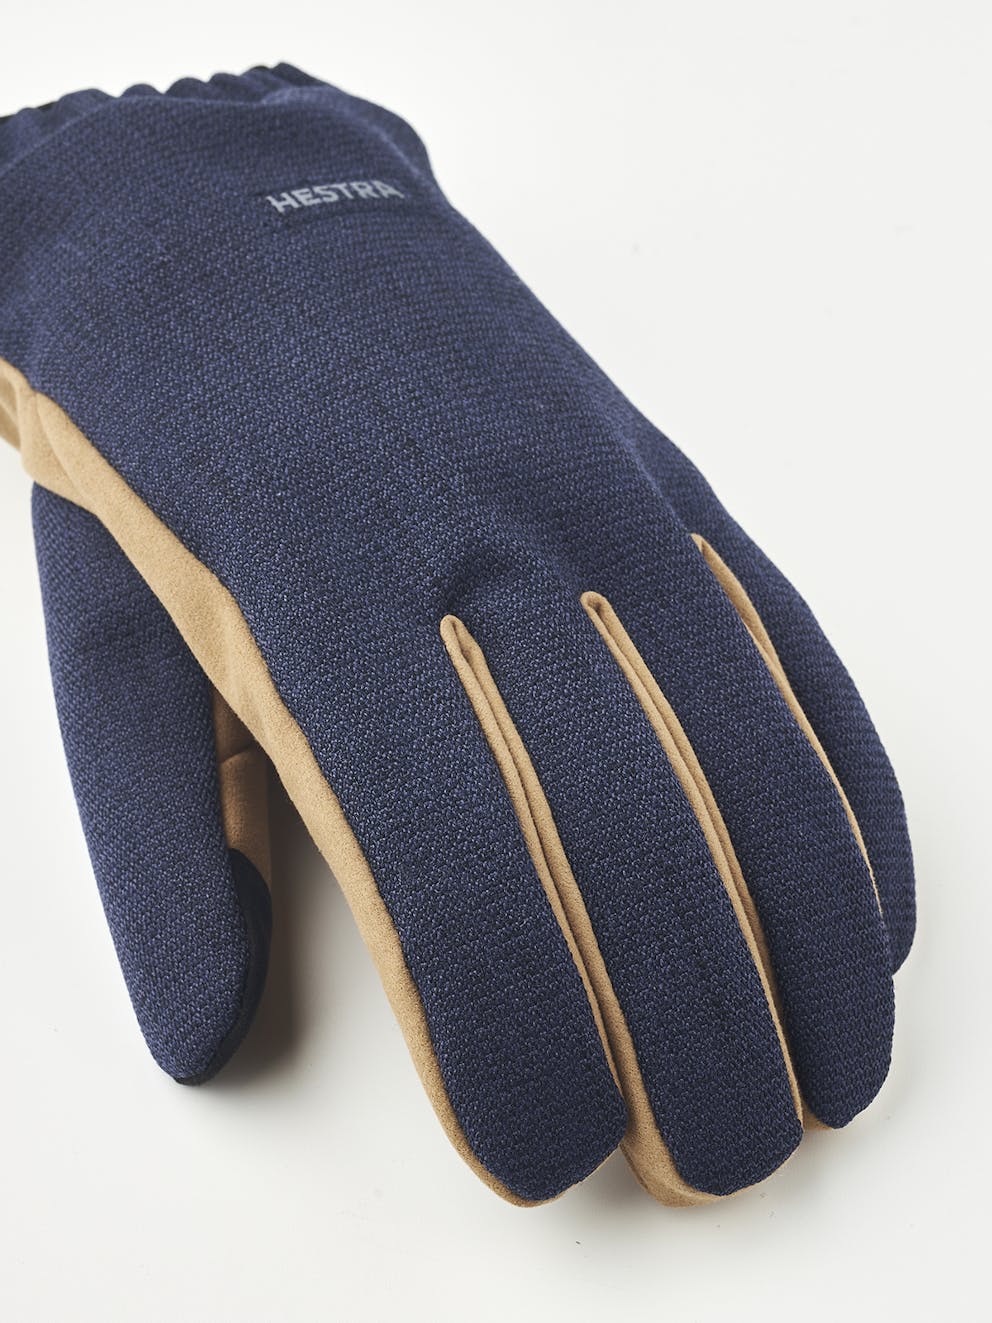 Men's Zephyr - Navy | Hestra Gloves